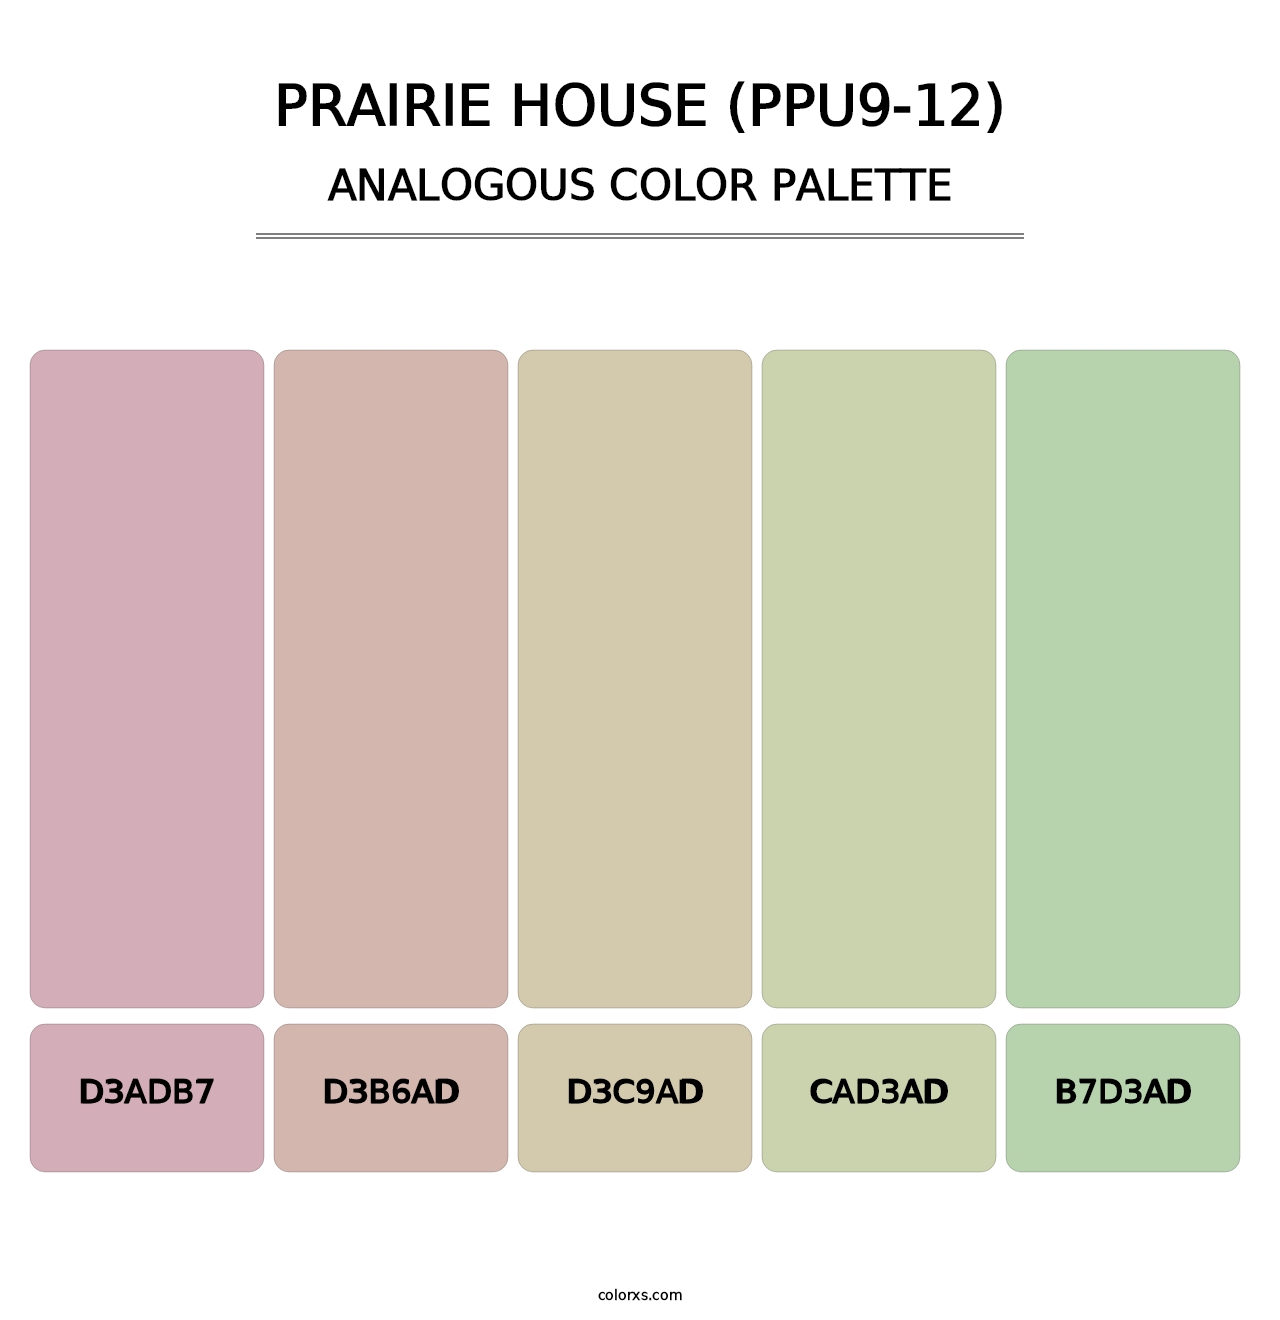 Prairie House (PPU9-12) - Analogous Color Palette